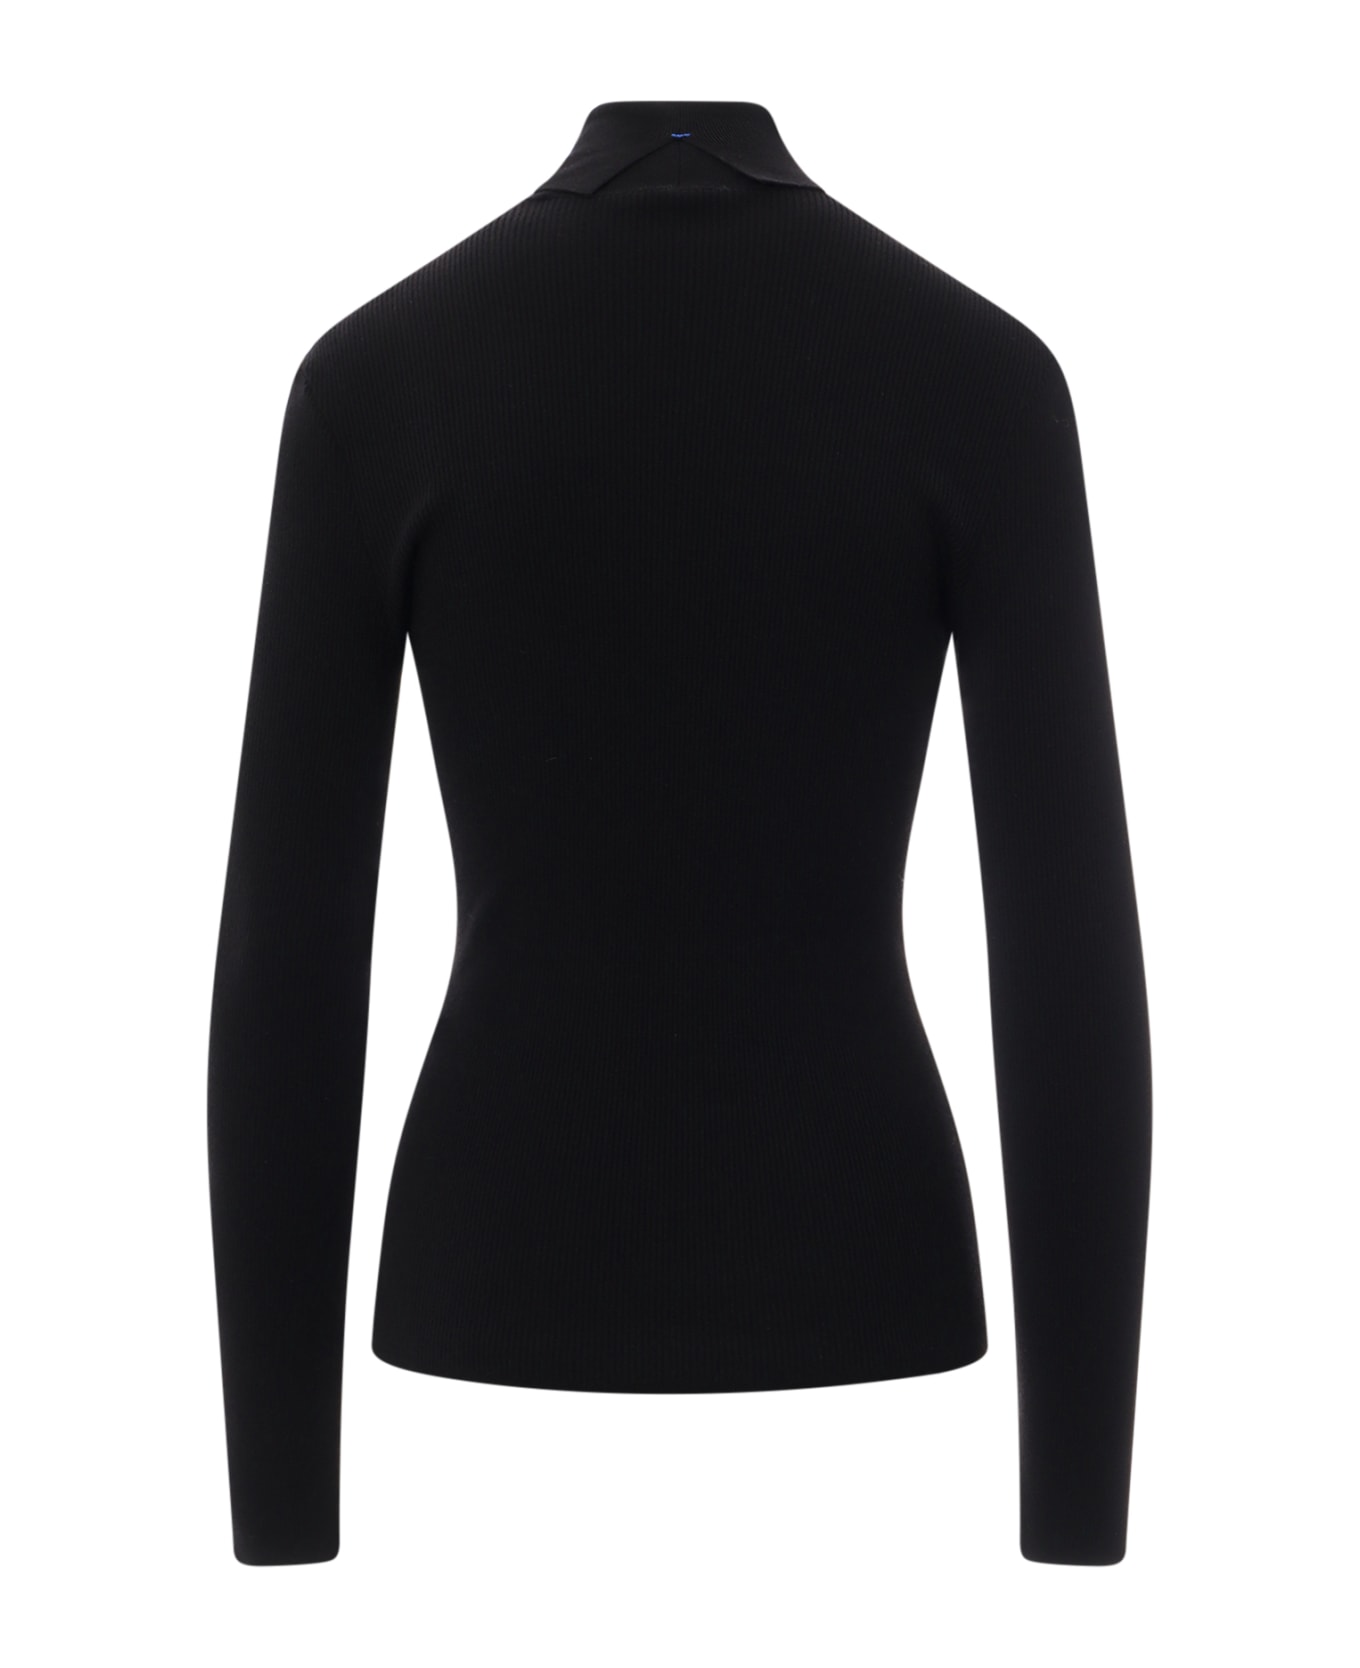 Burberry Sweater - Black